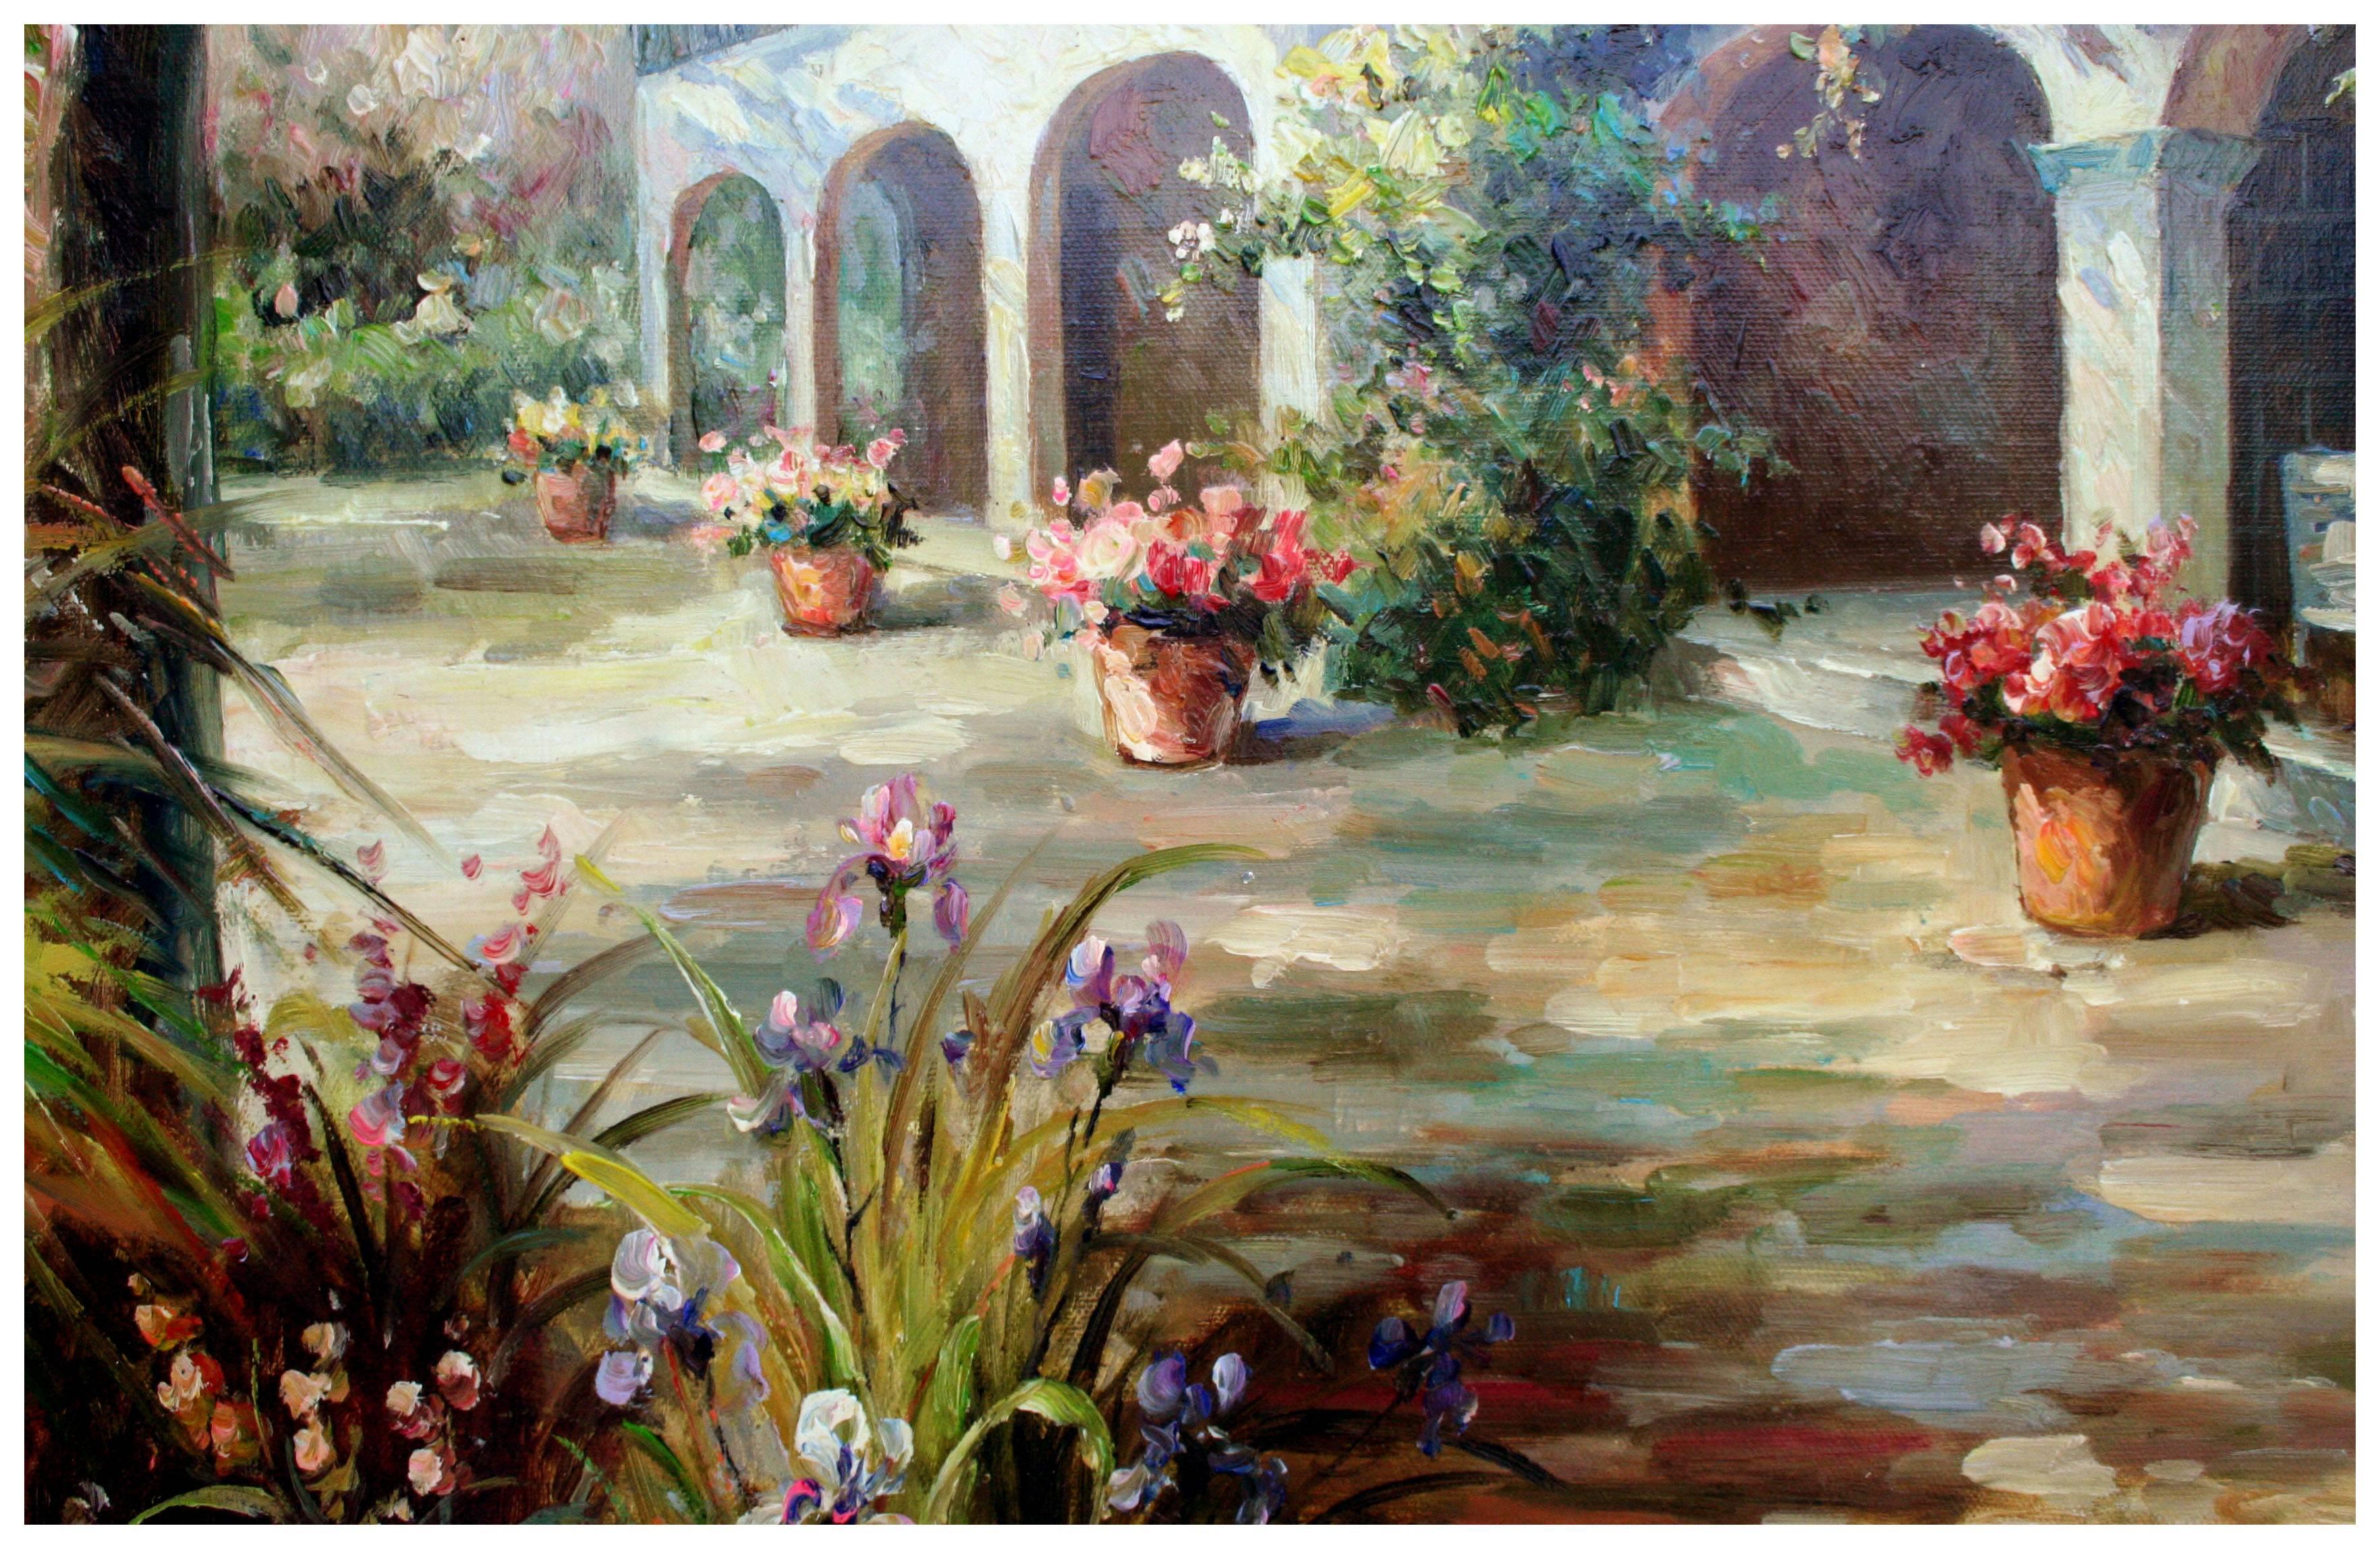 Vintage Palm Beach Courtyard Garden Landscape - American Impressionist Painting by Unknown